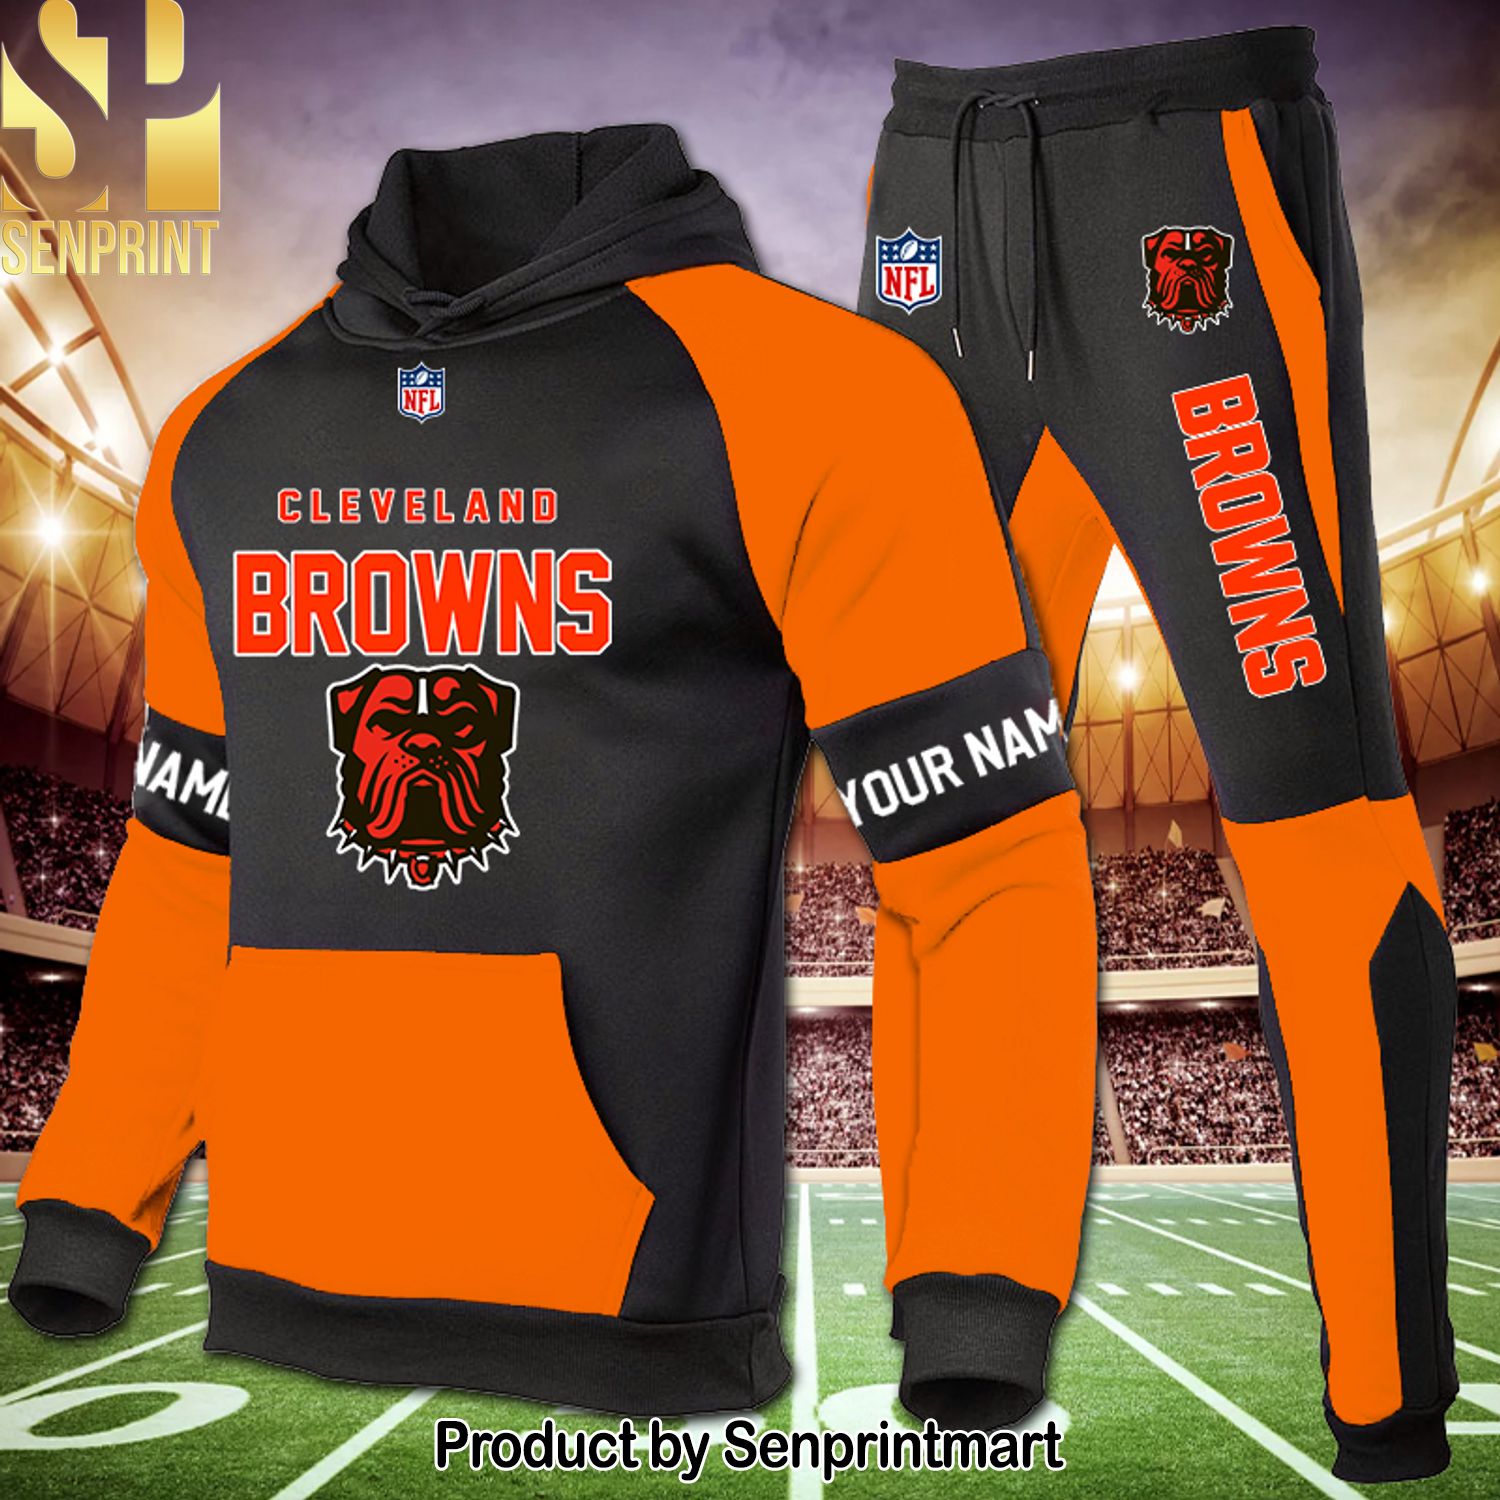 Cleveland Browns Hot Version Shirt and Pants